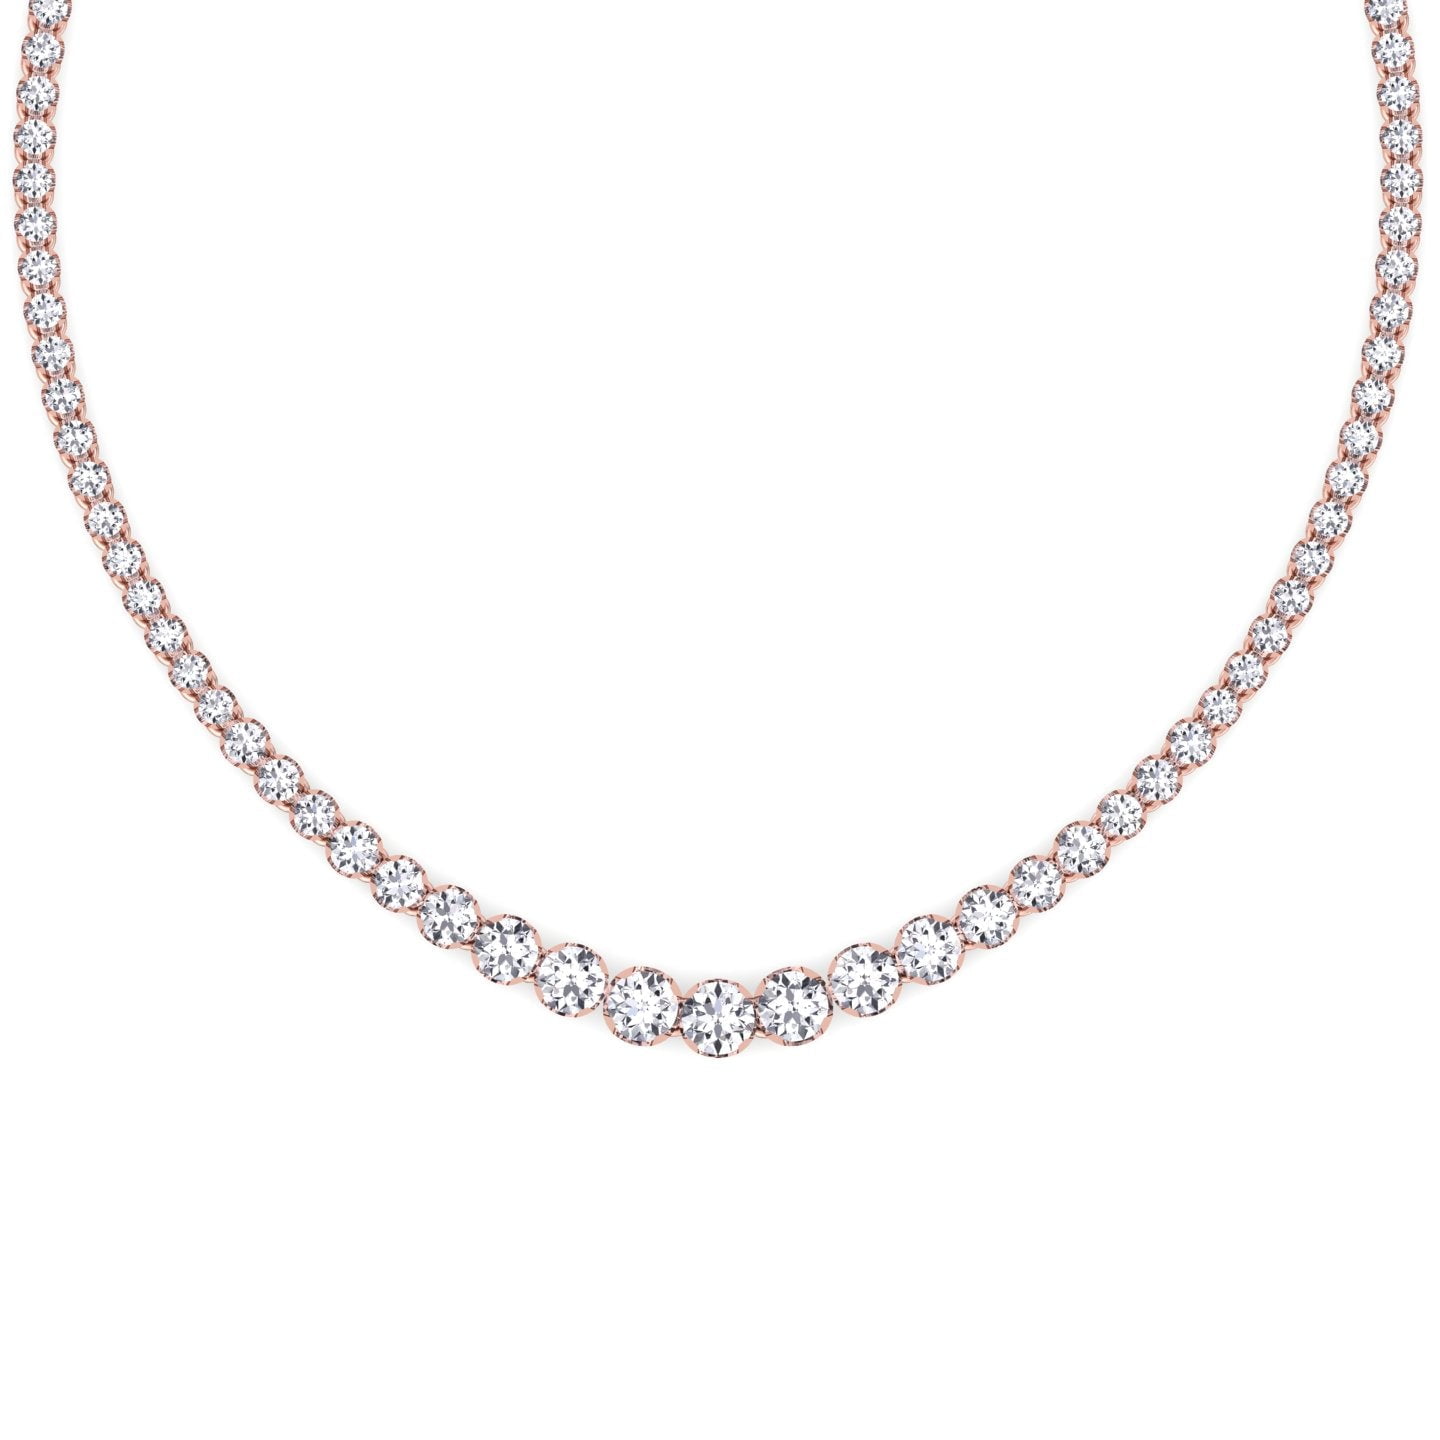 18k White Gold Plated Heart Tennis Necklace made w/ Swarovski Crystal Stone  | eBay